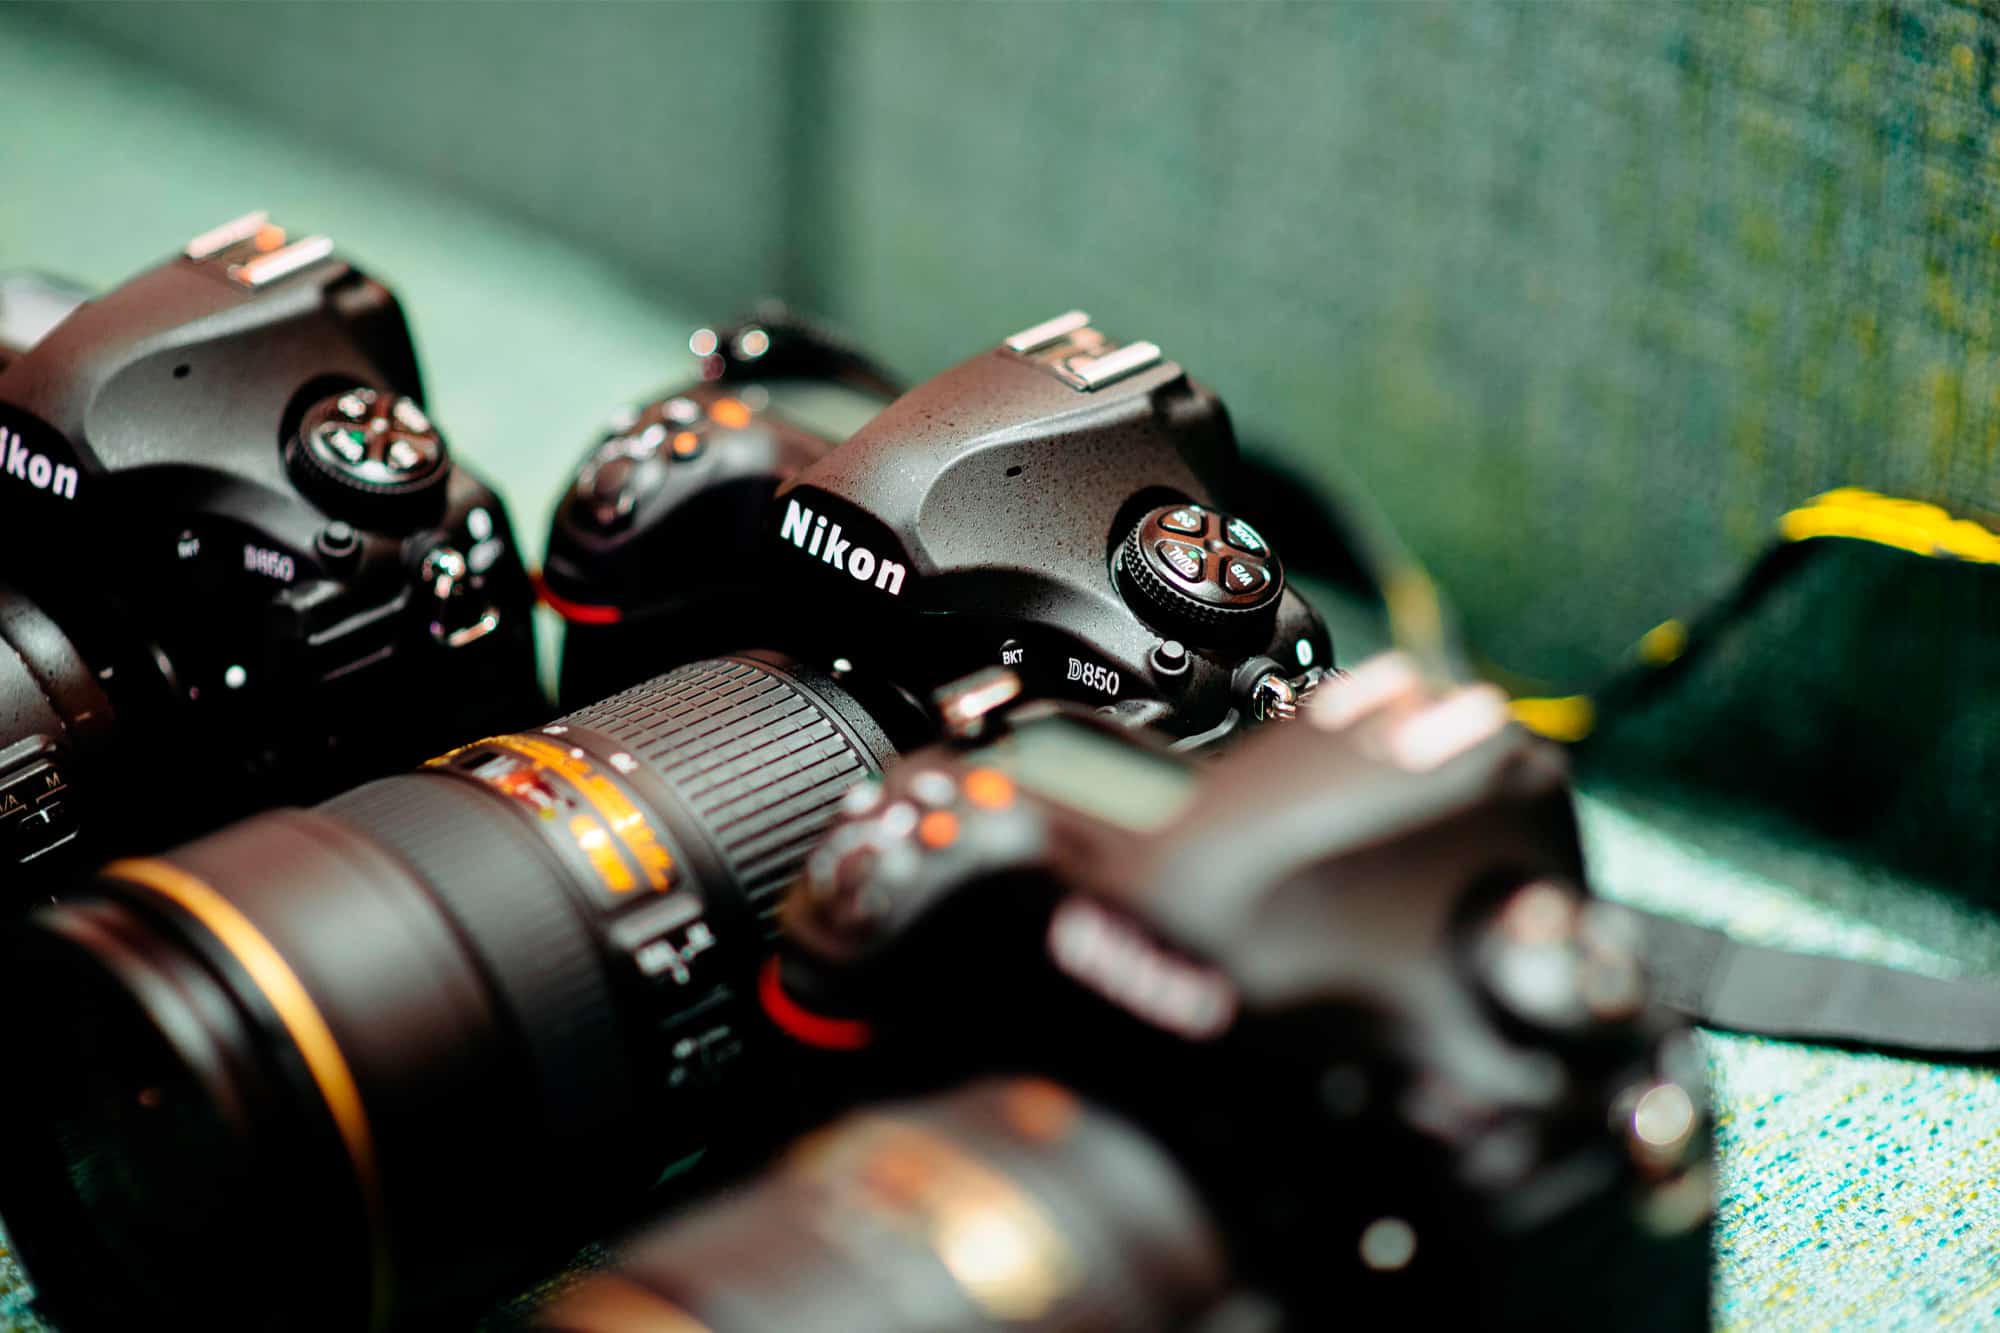 Cámaras Nikon DSLR para profesionales (2015)  Dslr nikon, Camara nikon,  Cámaras réflex digitales